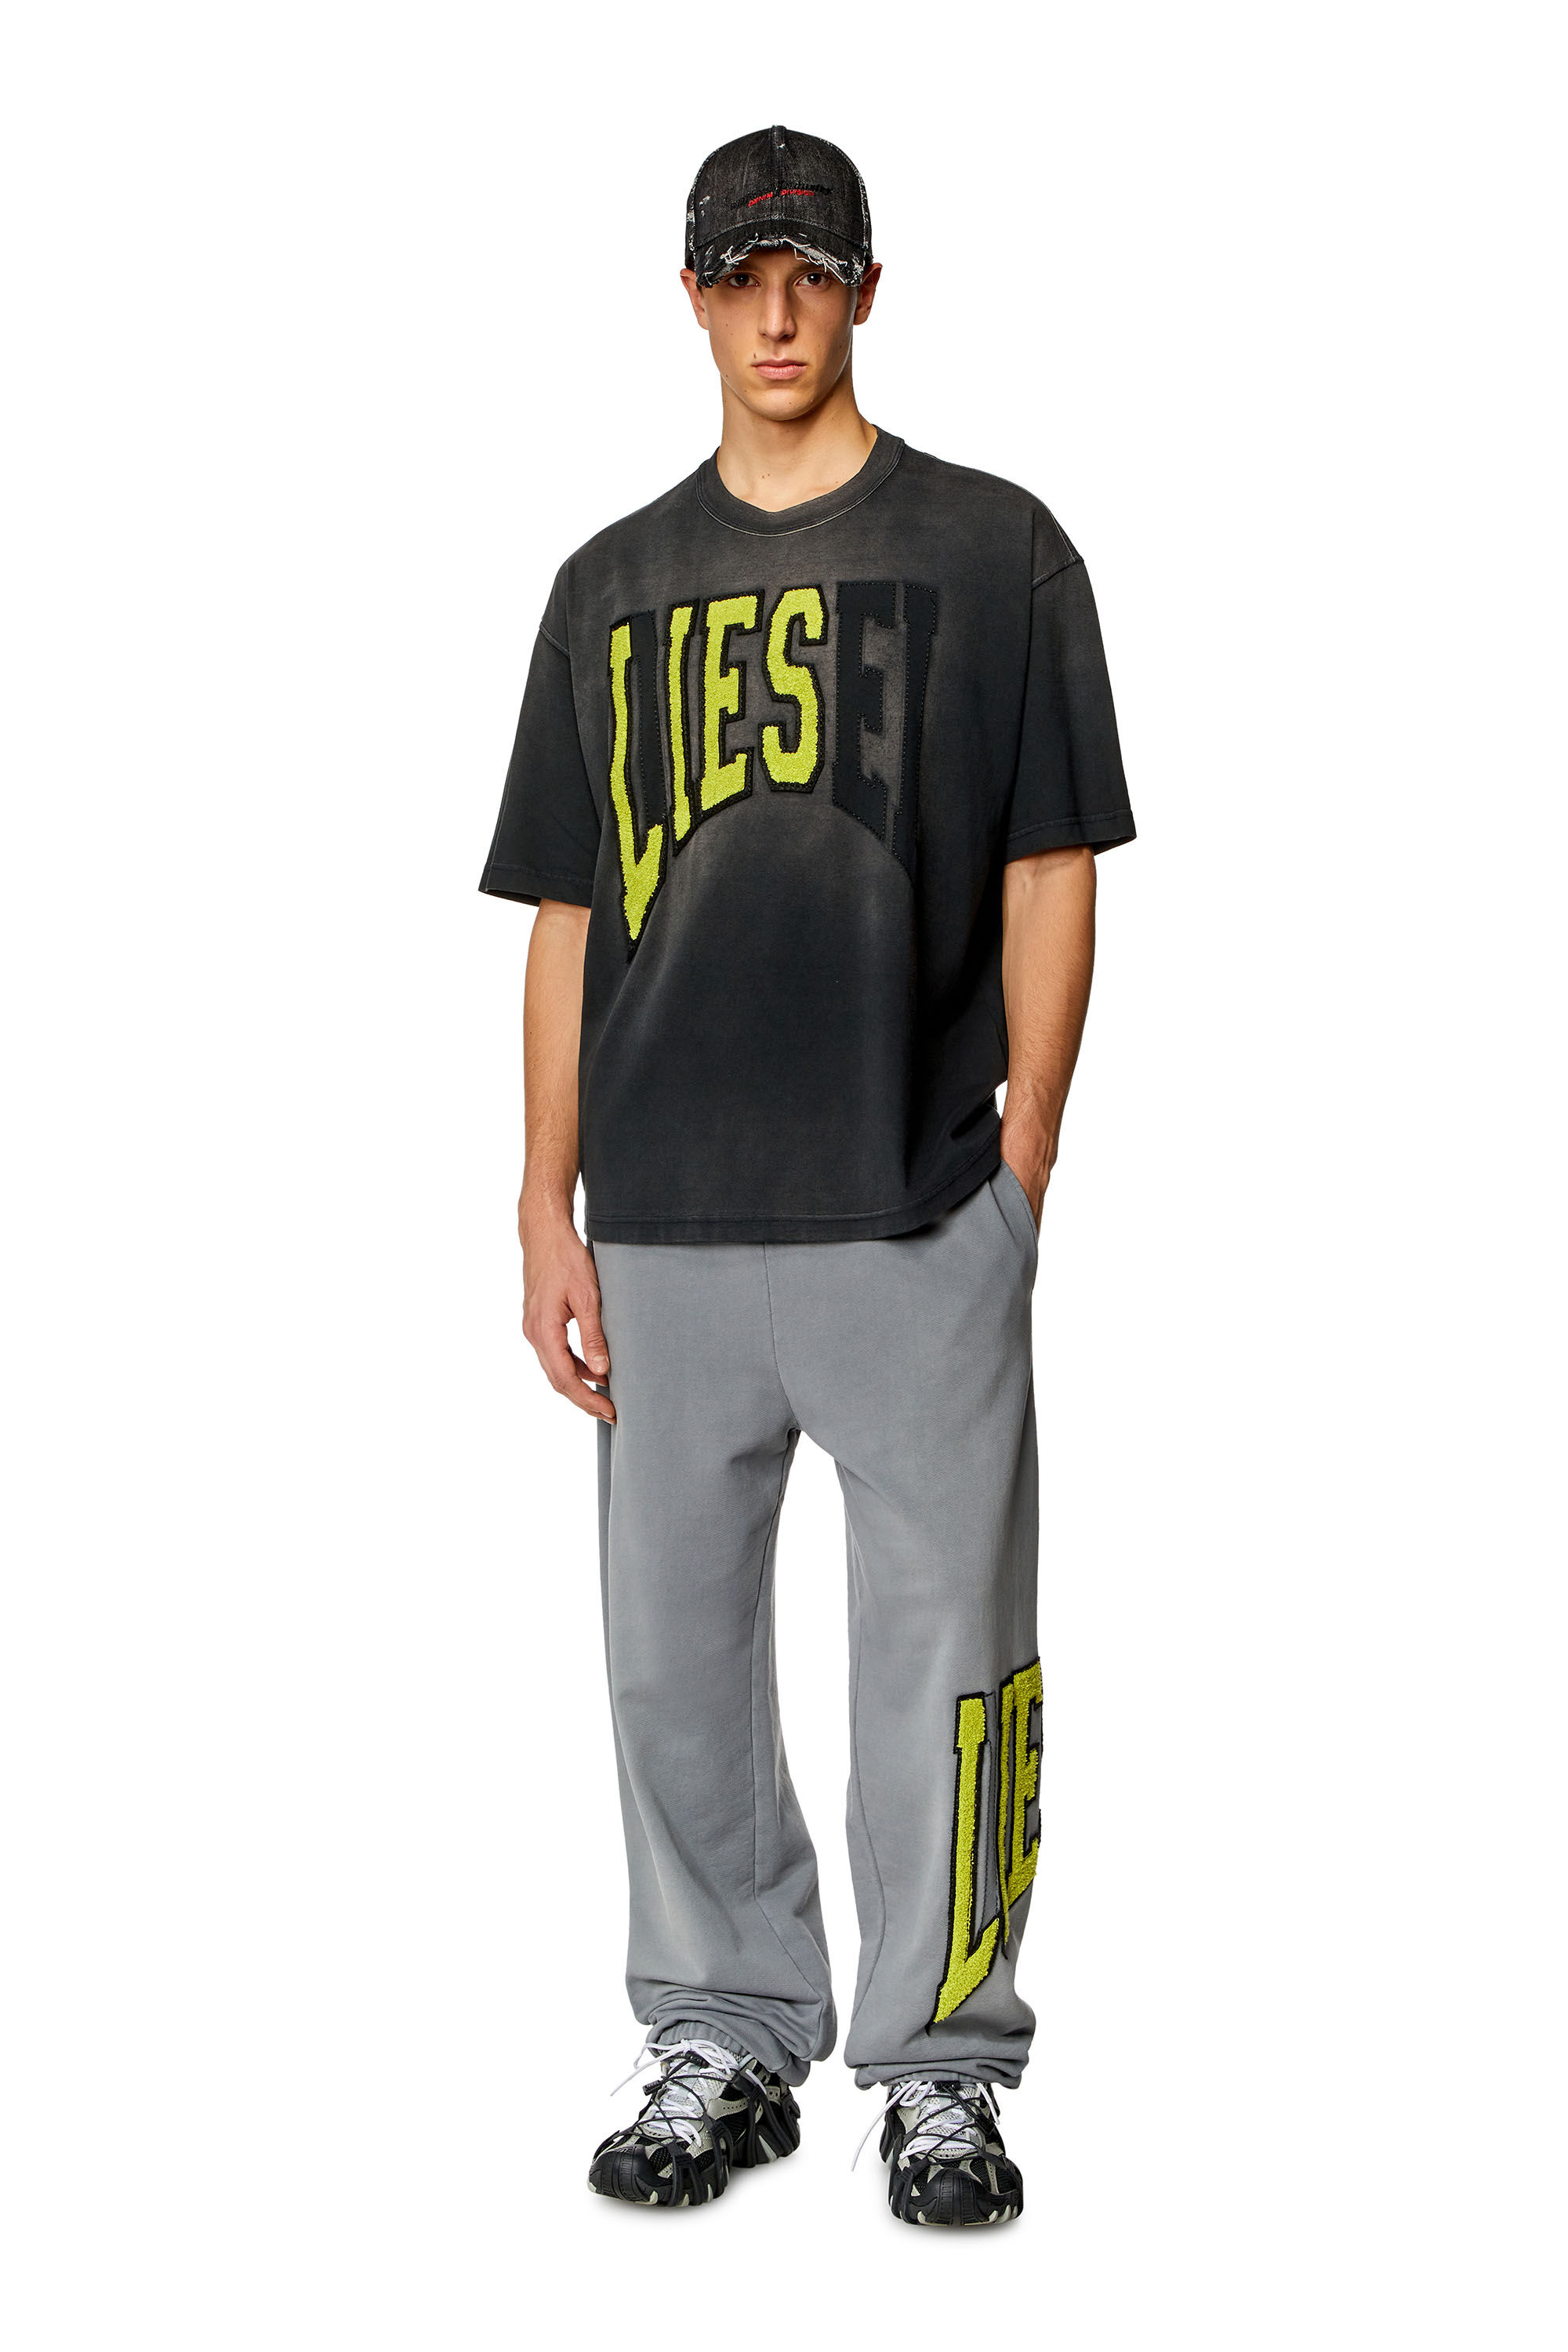 Diesel - T-WASH-N, Hombre Camiseta extragrande con logotipo Diesel Lies in Negro - Image 1